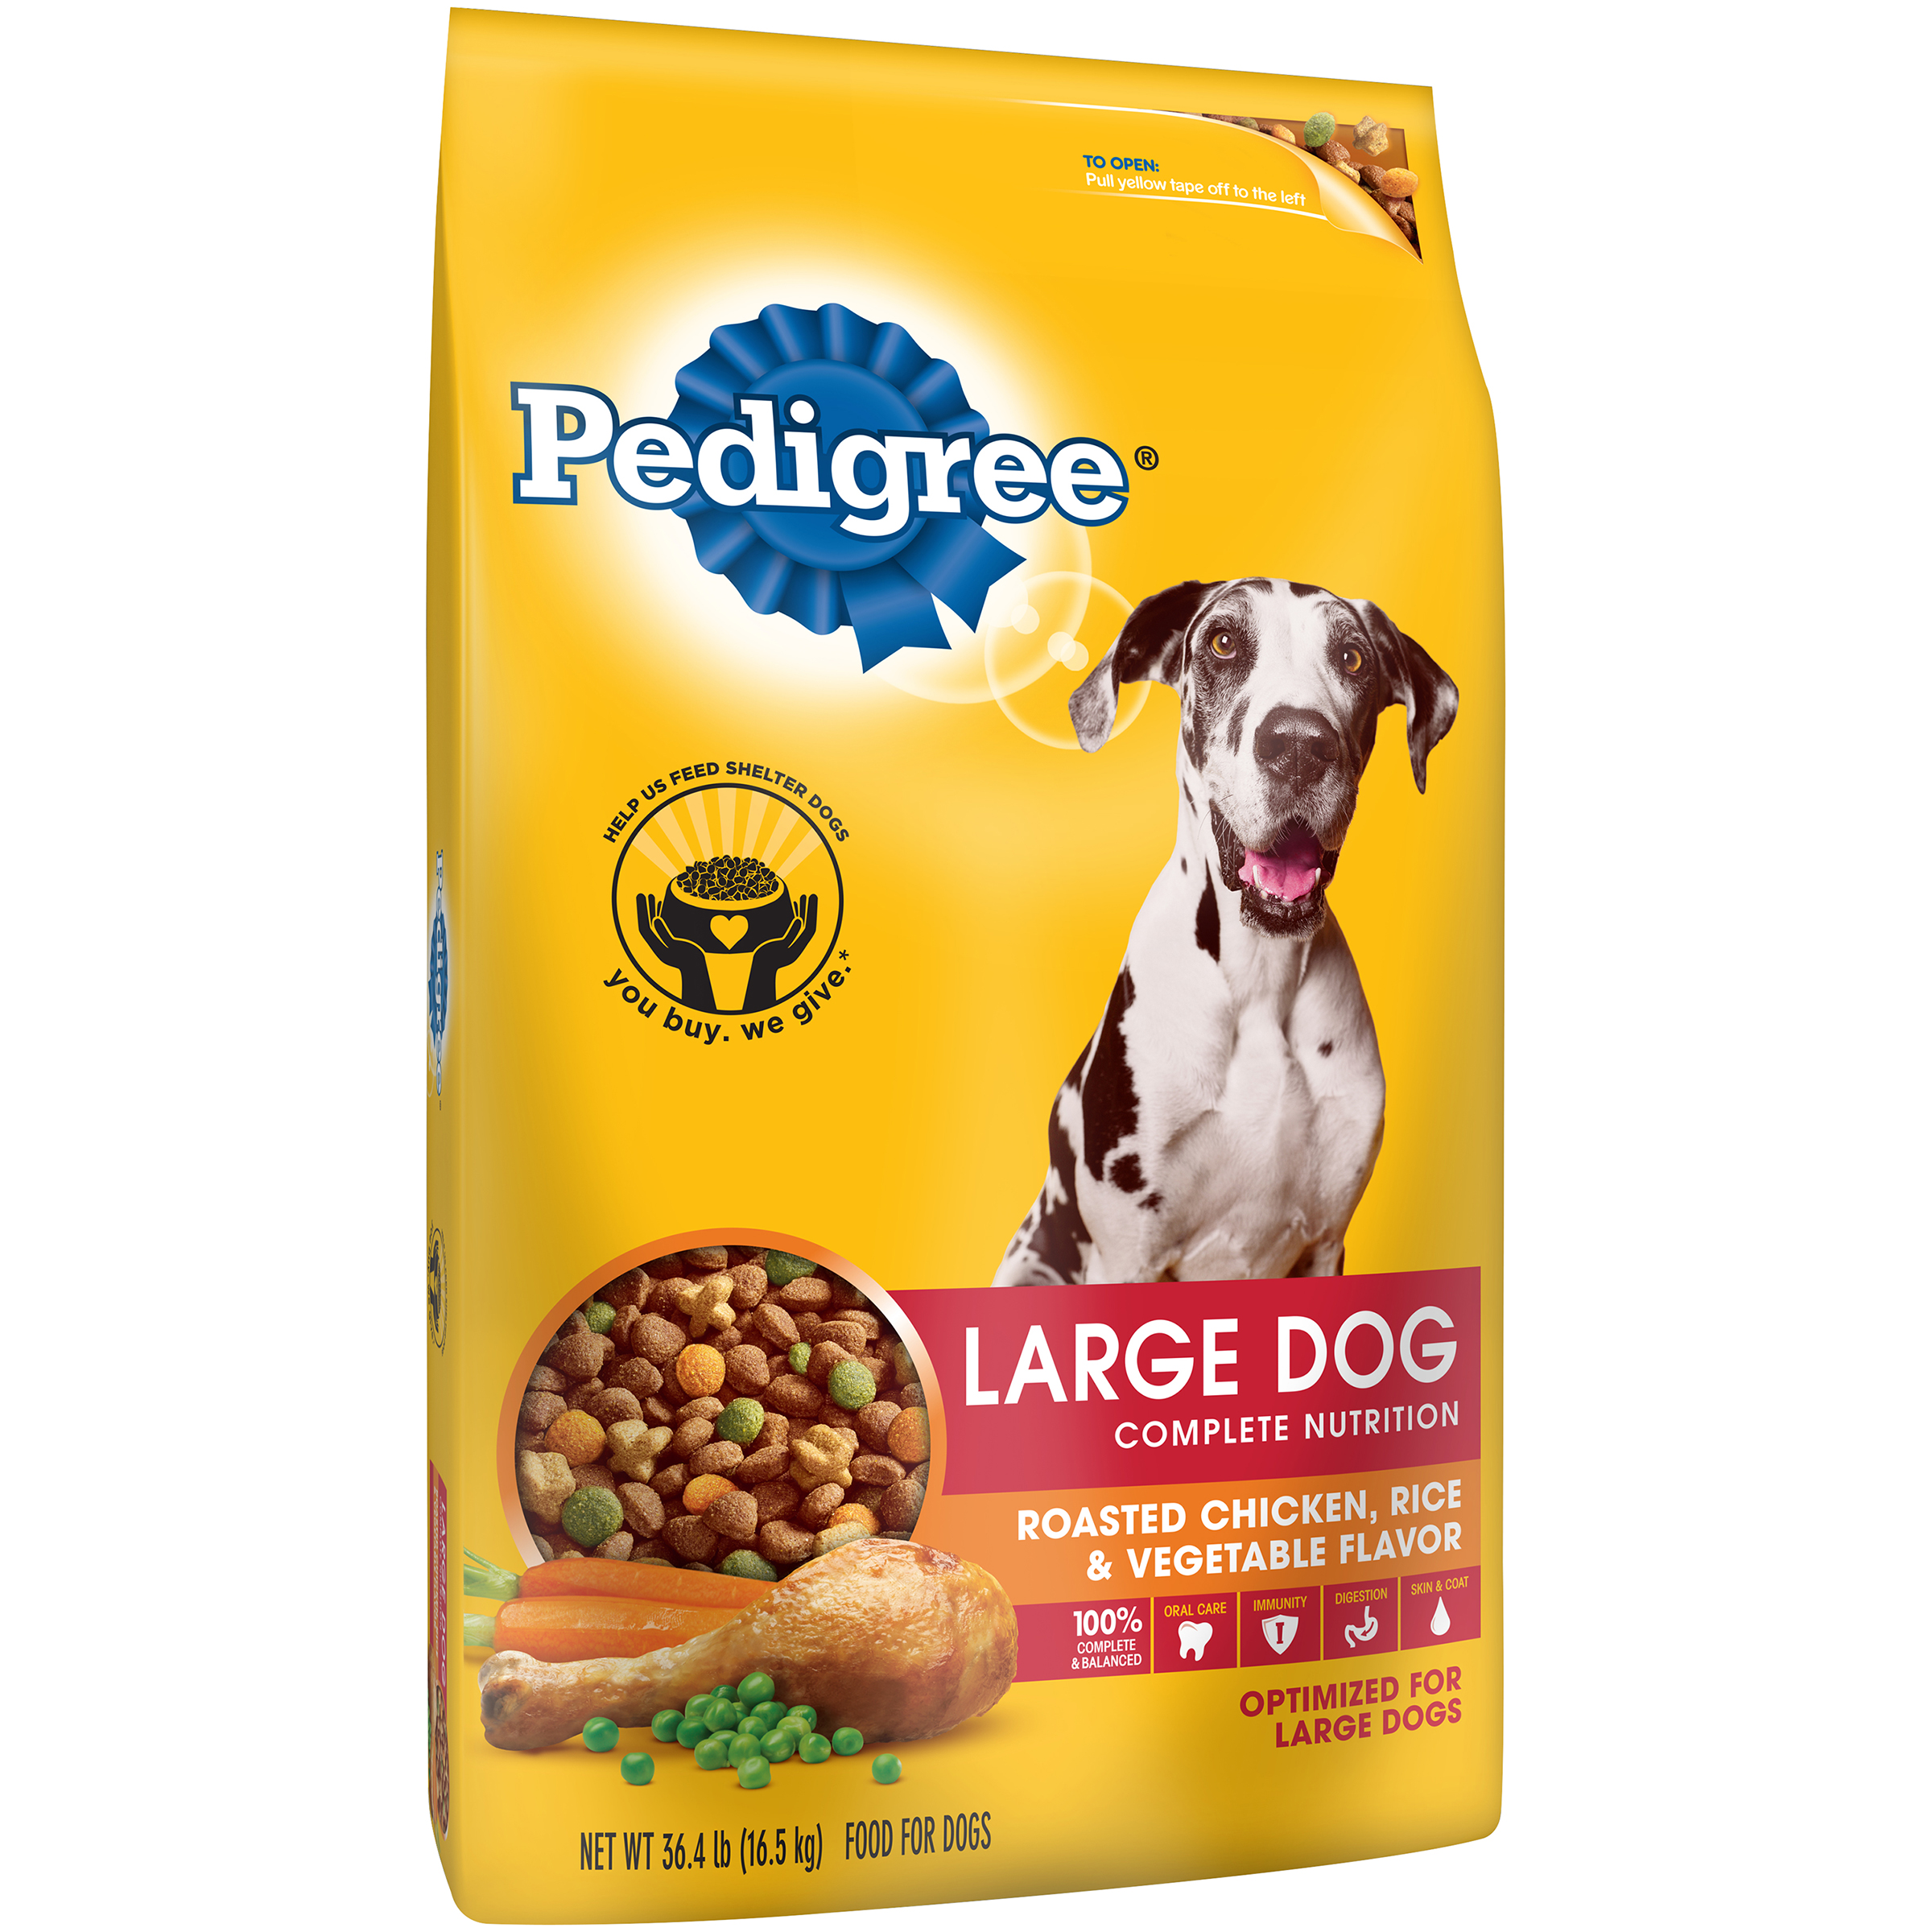 can puppies eat big dog food